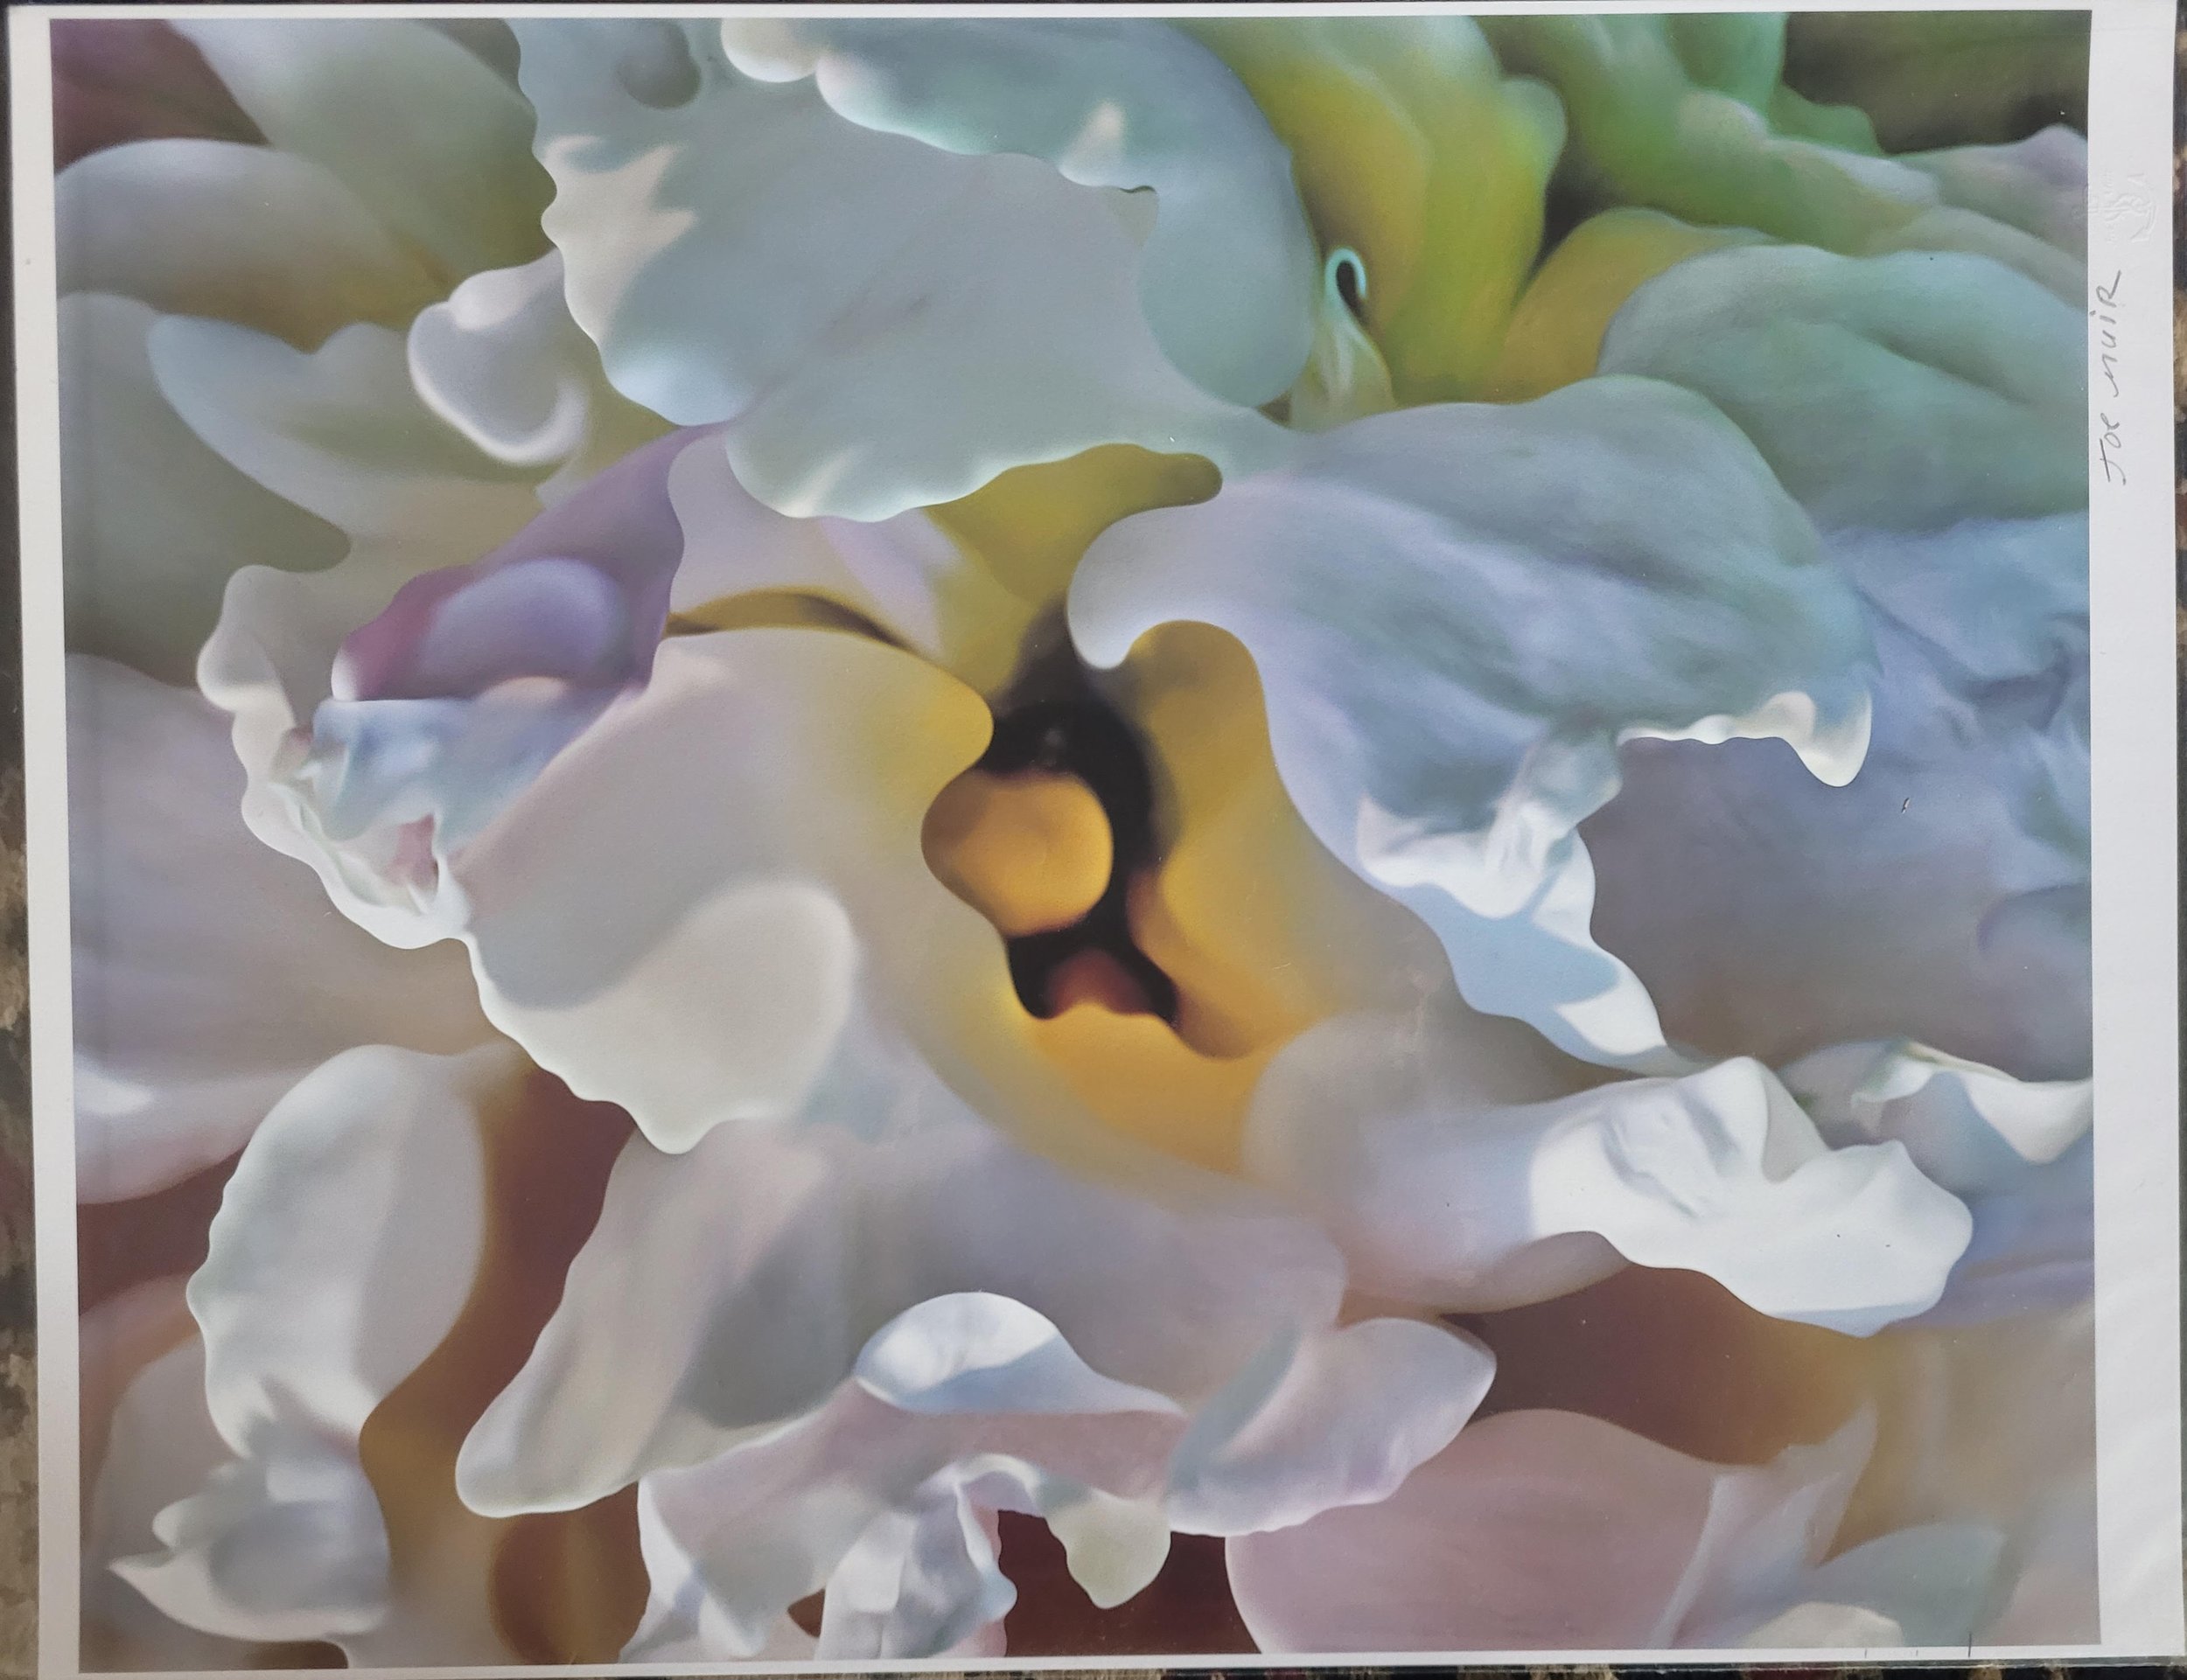  Joe Muir,  # 2,  From the Flower portfolio, 1/3, 2015-2020, Inkjet prints, 16 x 20 inches, $950. each (framed) 